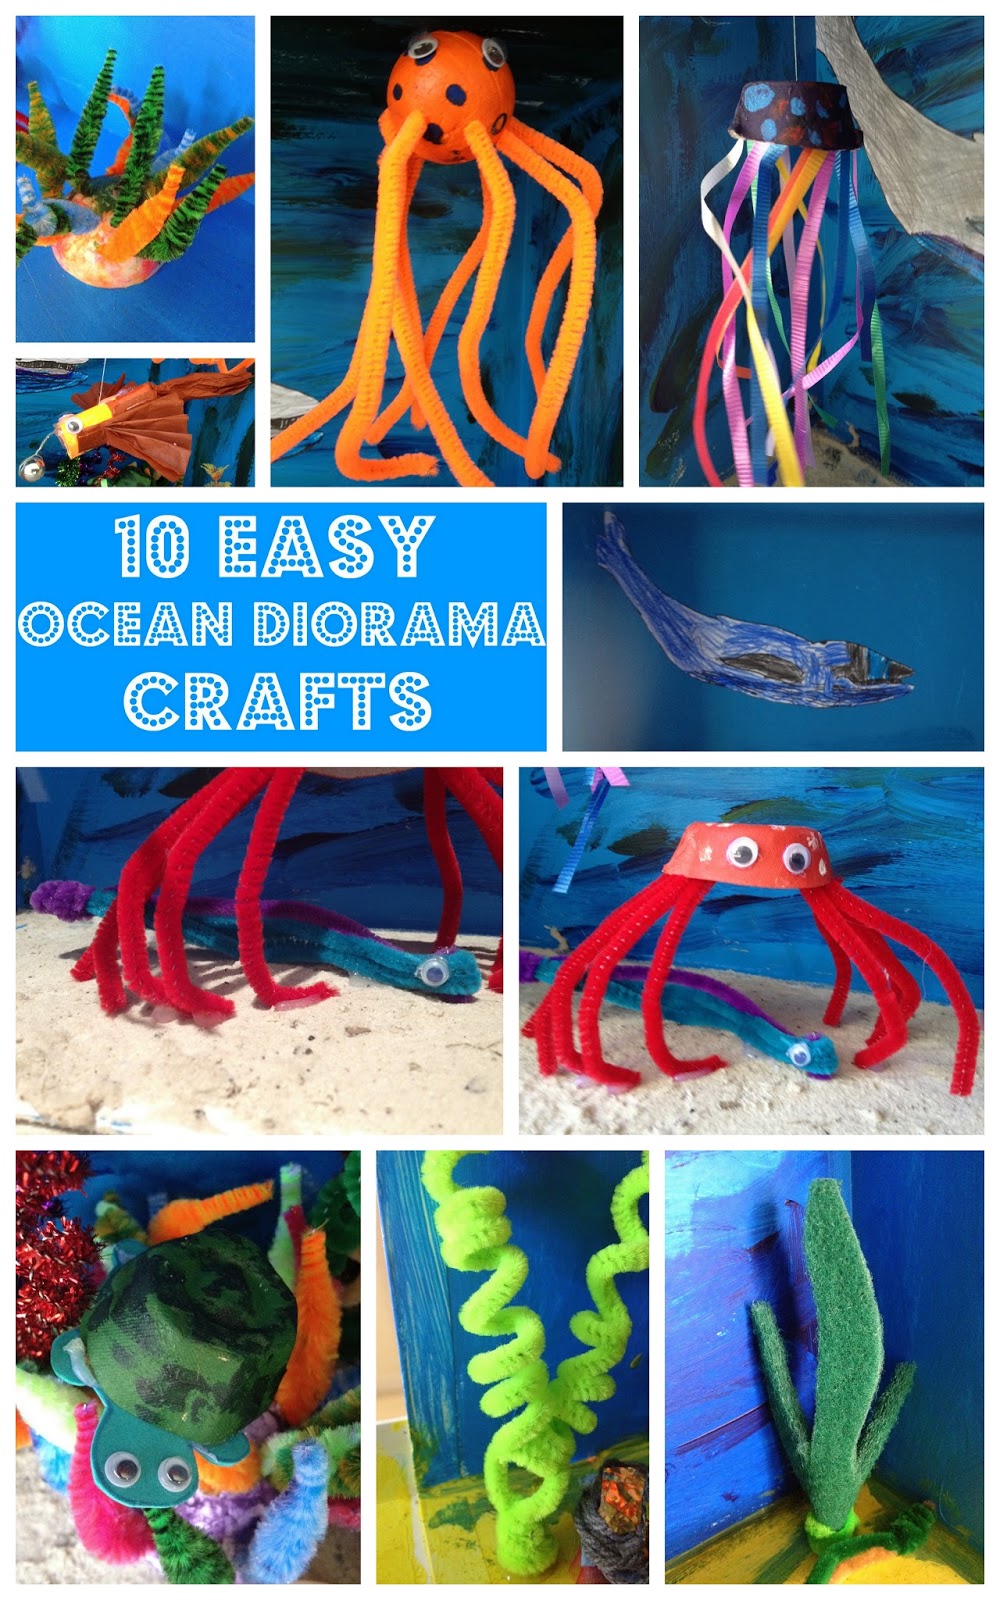 Our Worldwide Classroom: Ten Easy Ocean Diorama Crafts